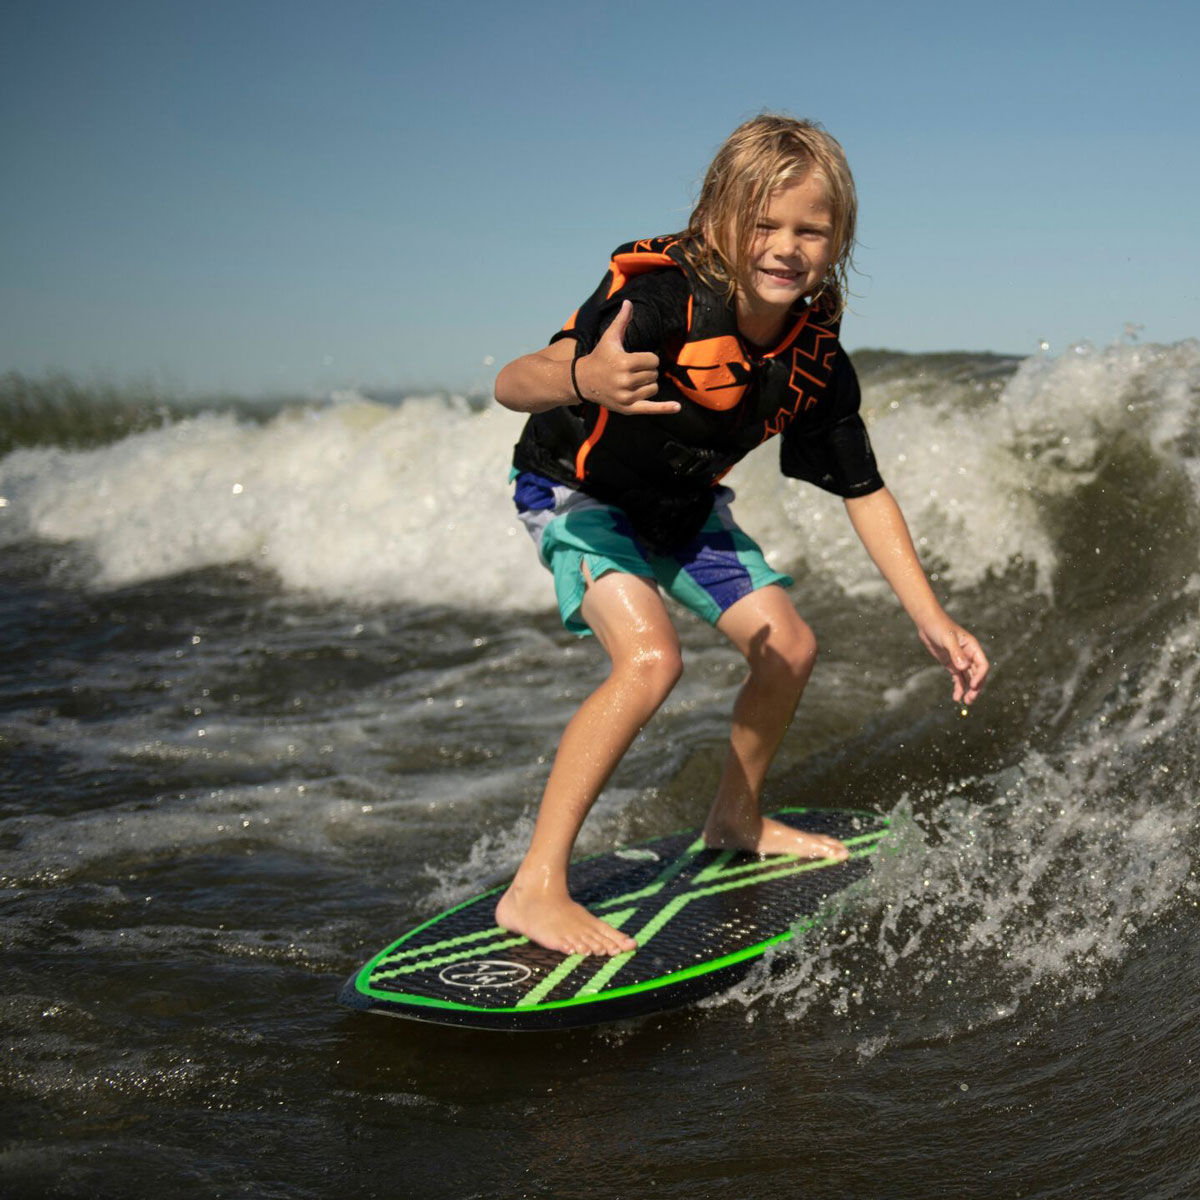 Kid on a surfboard